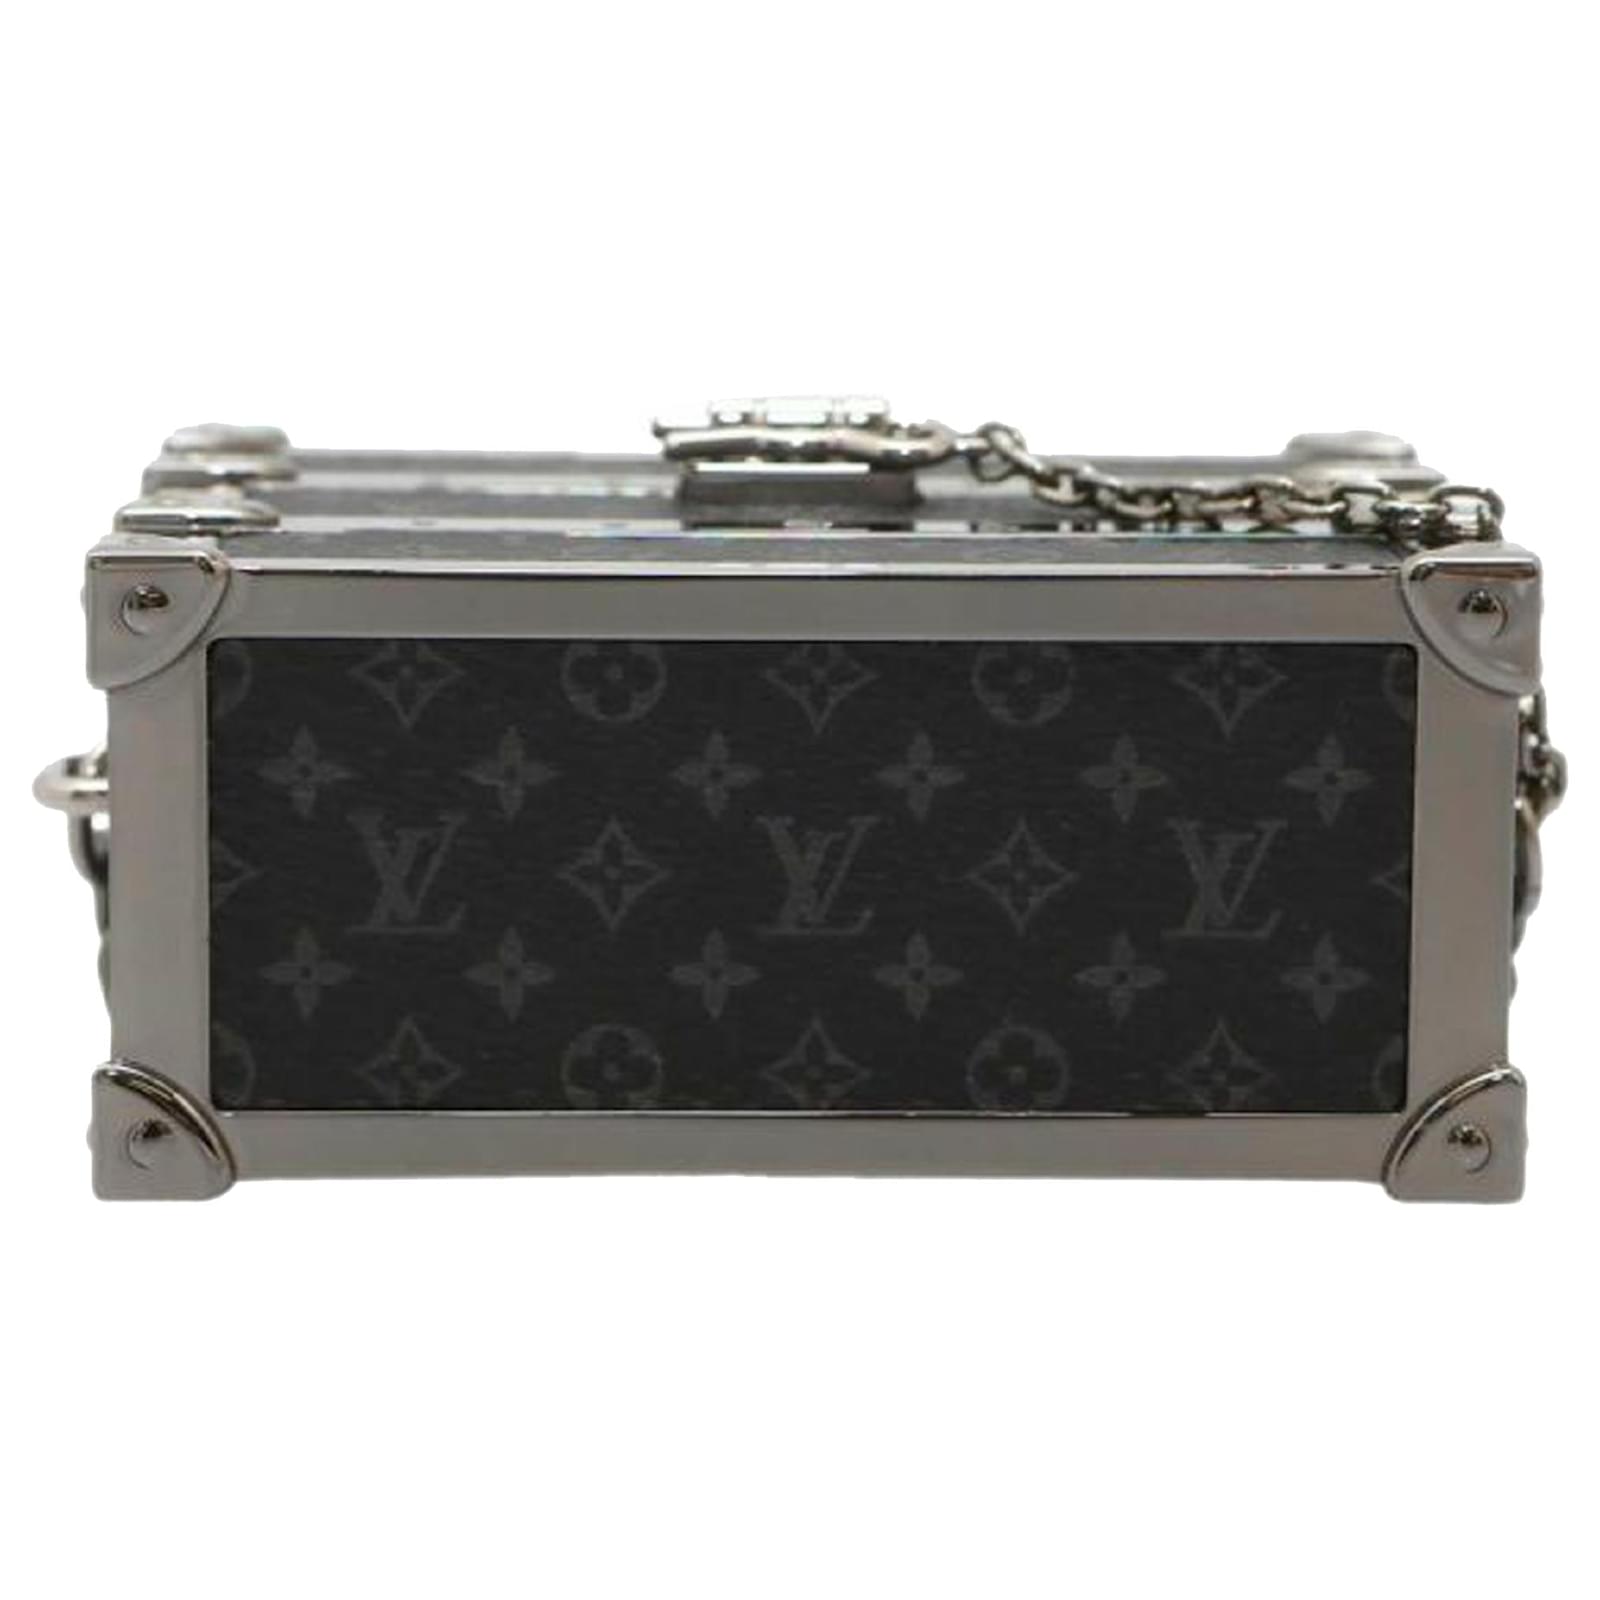 Louis Vuitton Trunk Clutch Box Monogram Titanium